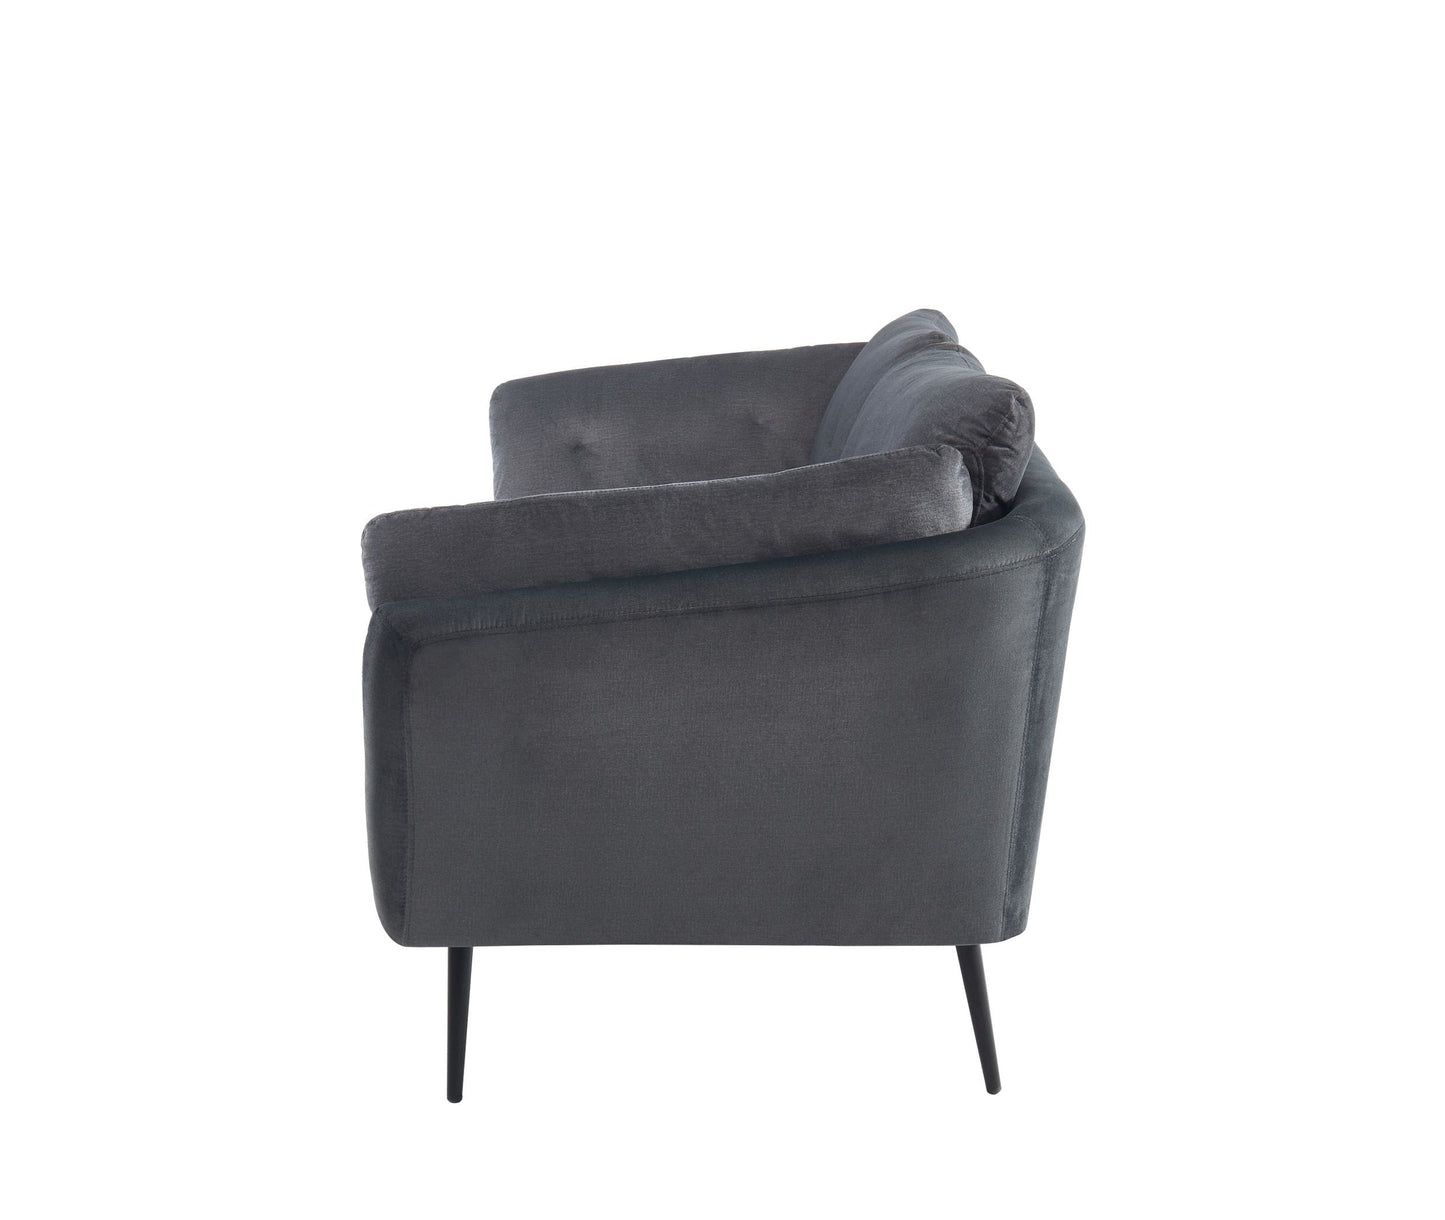 VIG Furniture Divani Casa Cody Dark Grey Fabric Sofa